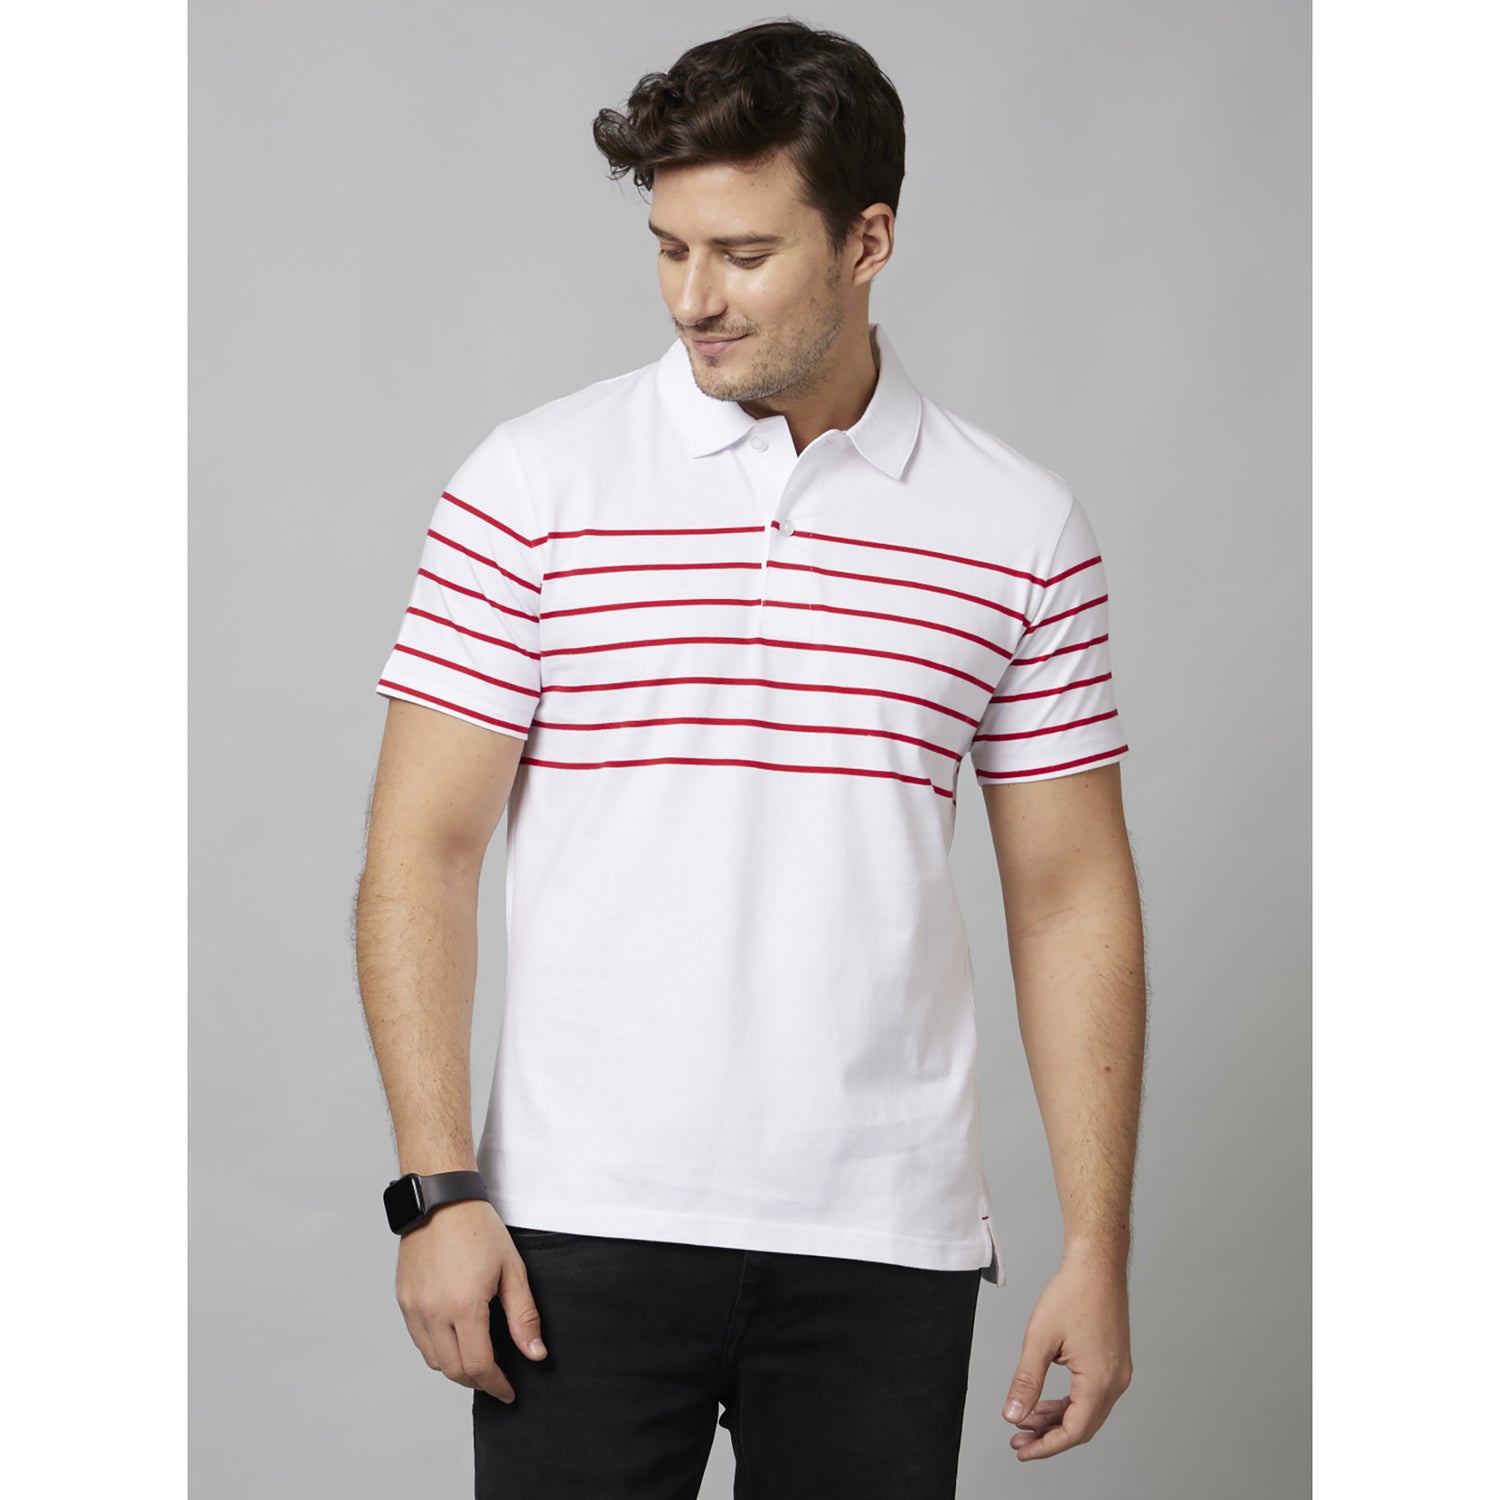 White Horizontal Stripes Short Sleeve Cotton T-Shirts (FENEC)